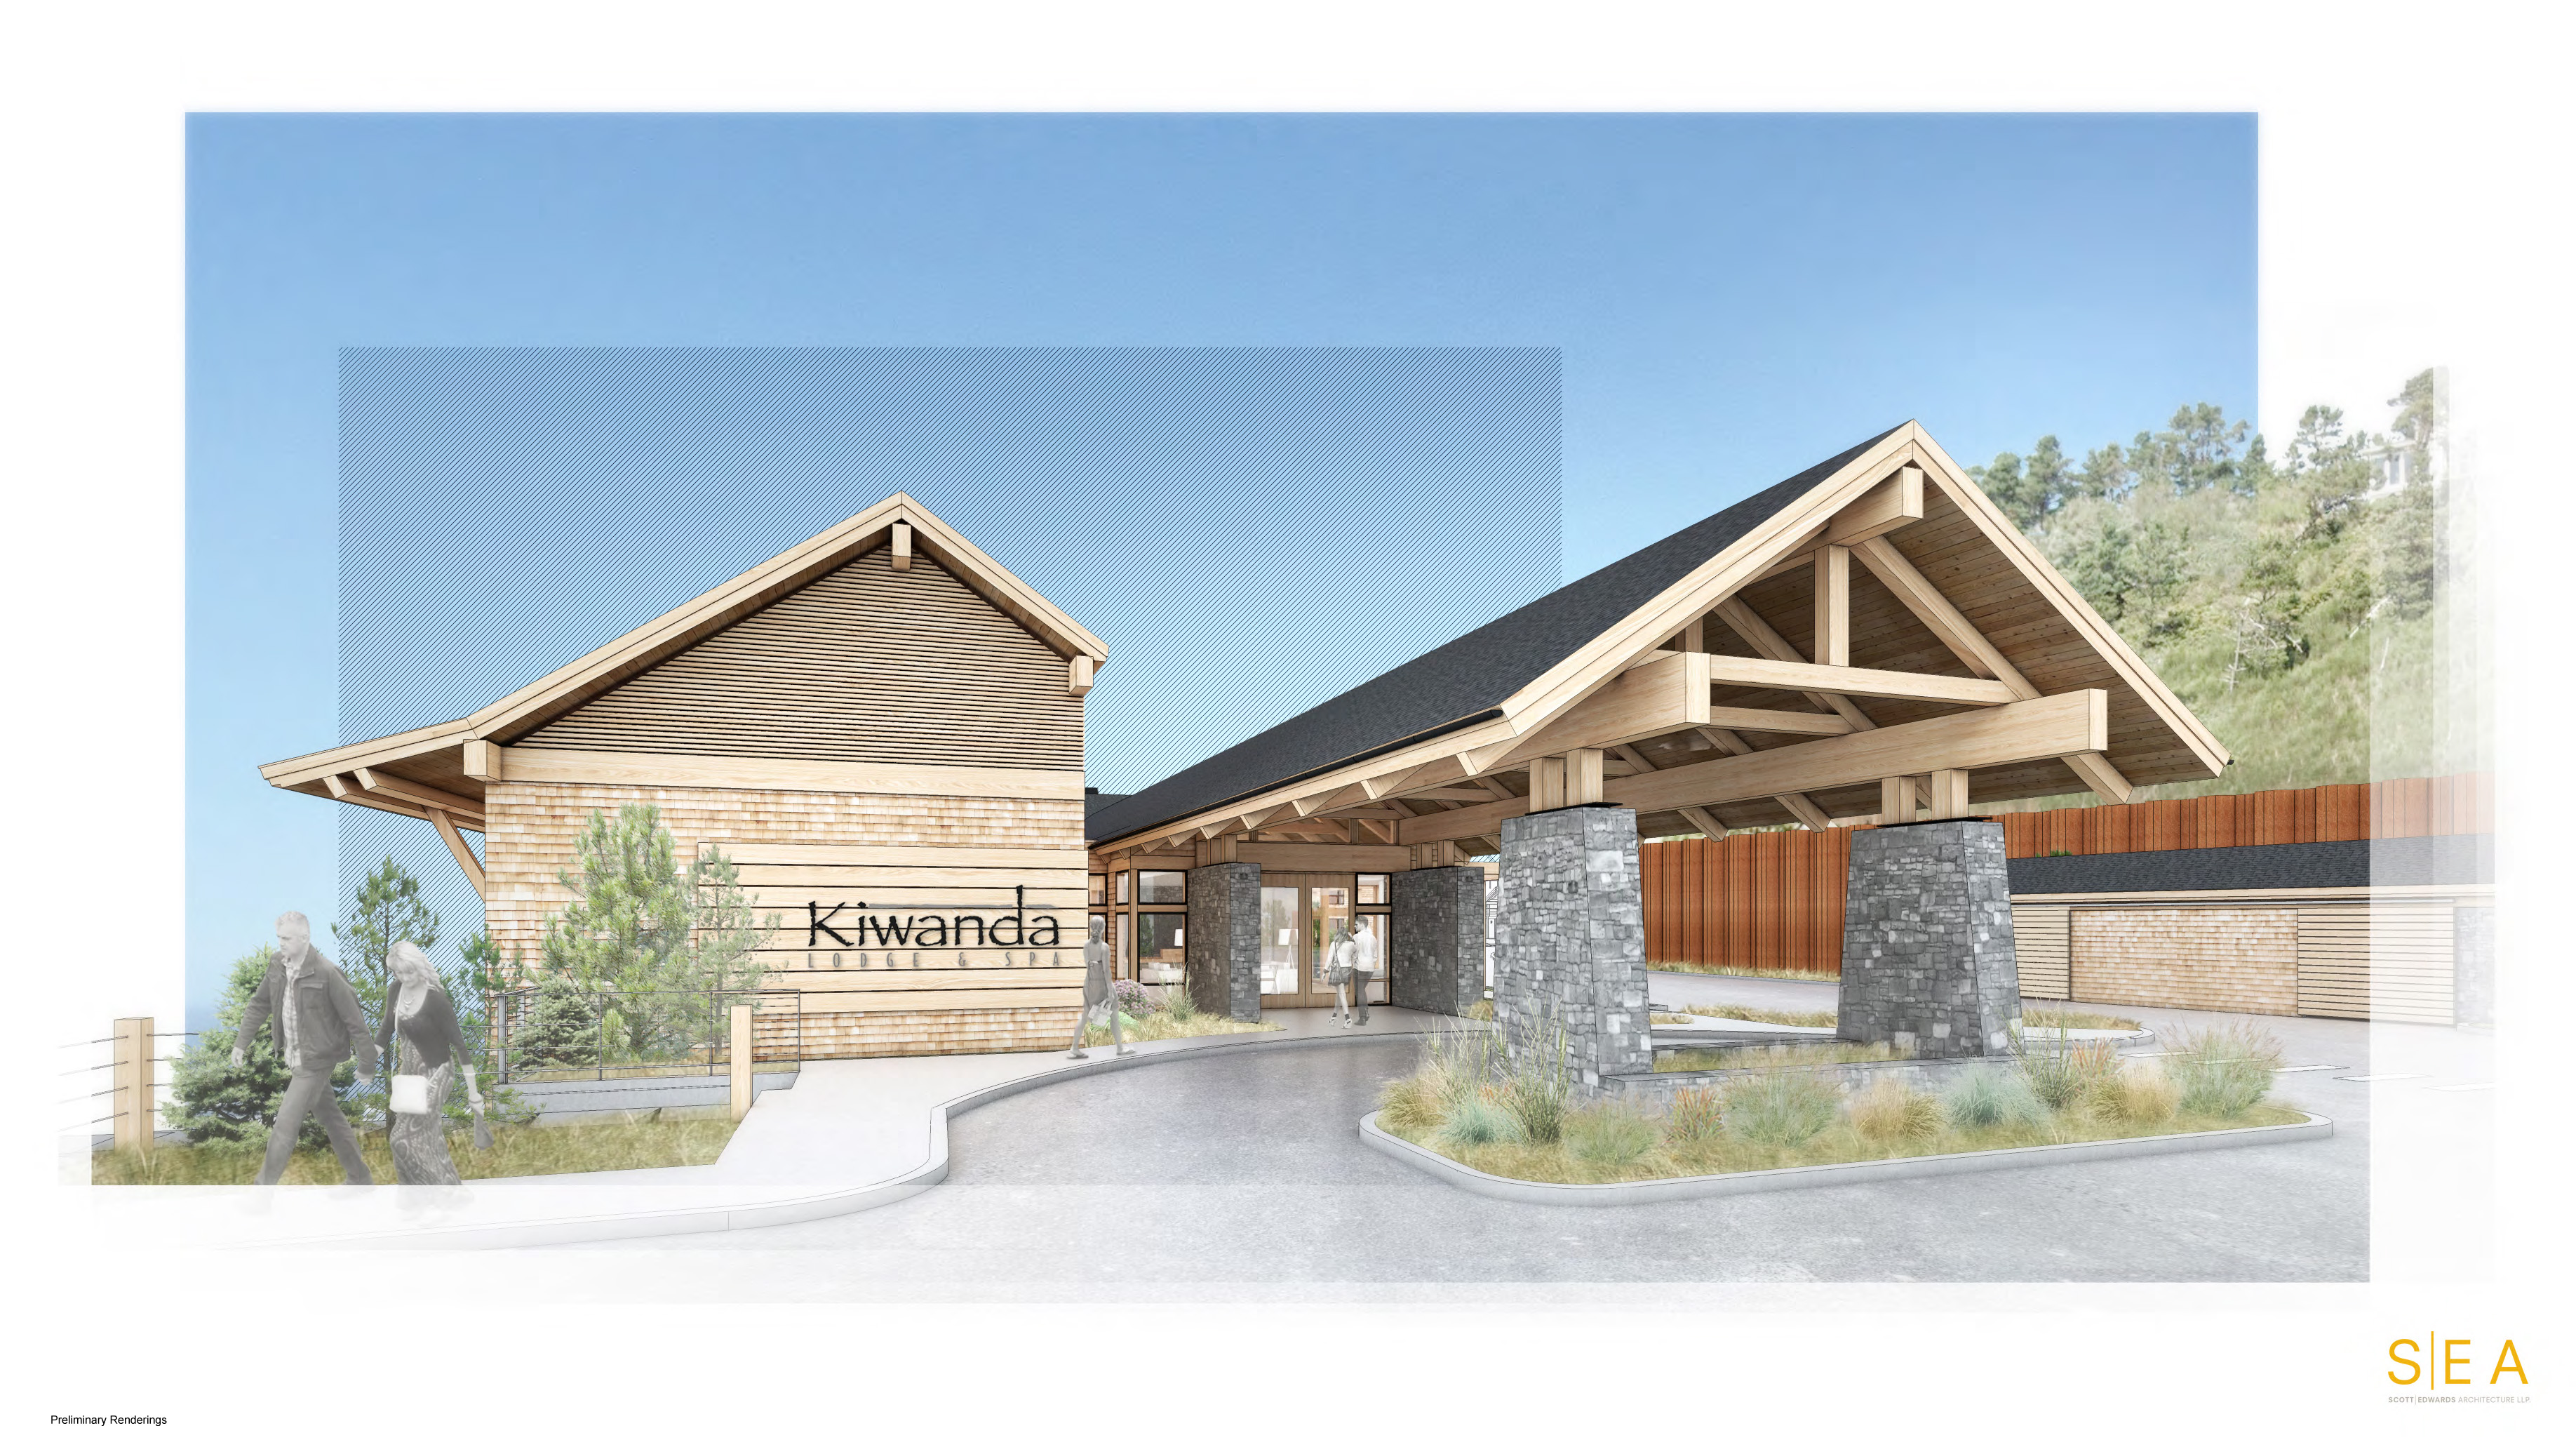 Kiwanda Lodge & Spa breaks ground on Oregon Coast.